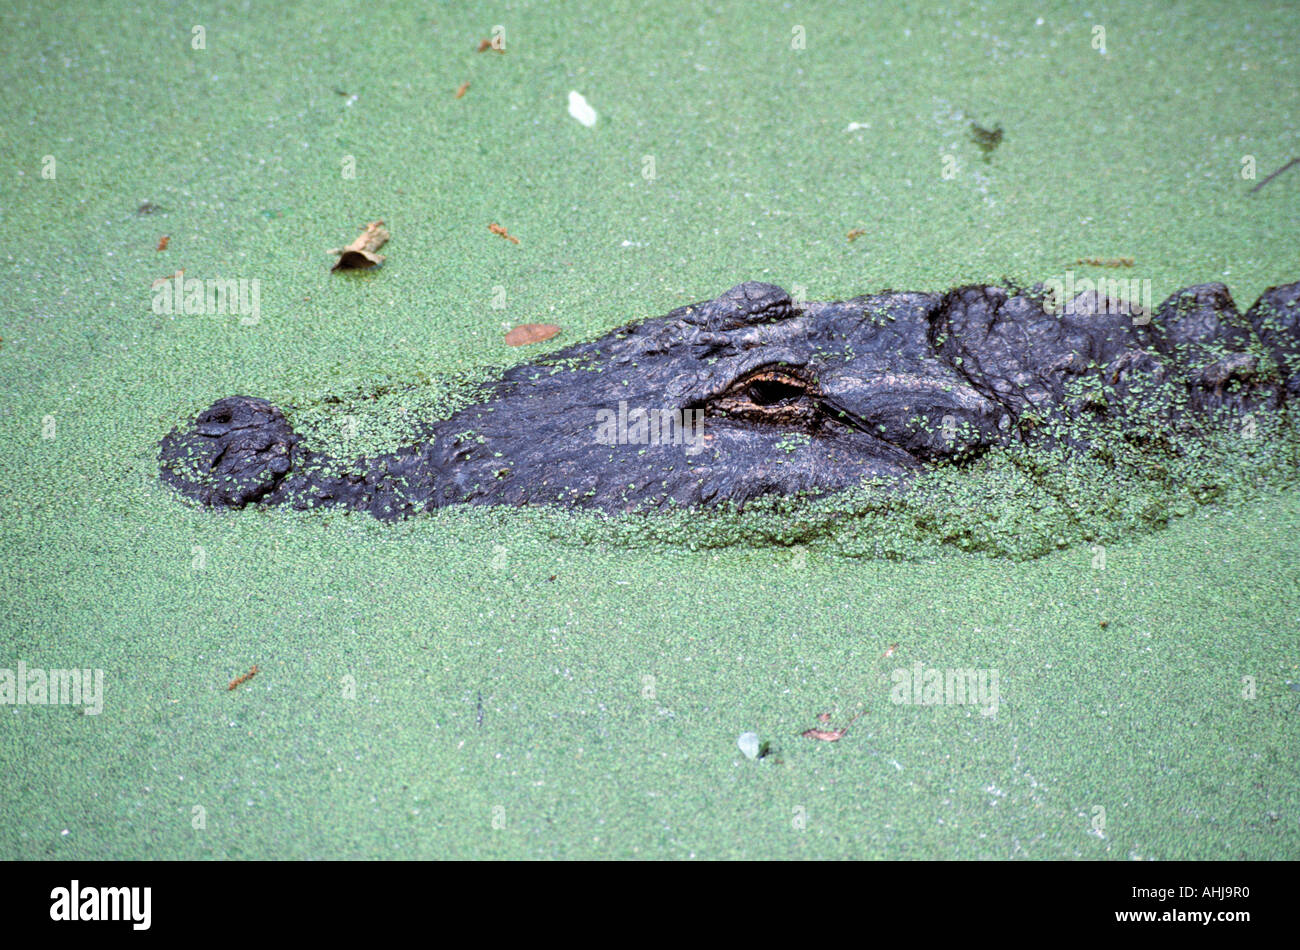 American alligator in duckweed Stock Photo